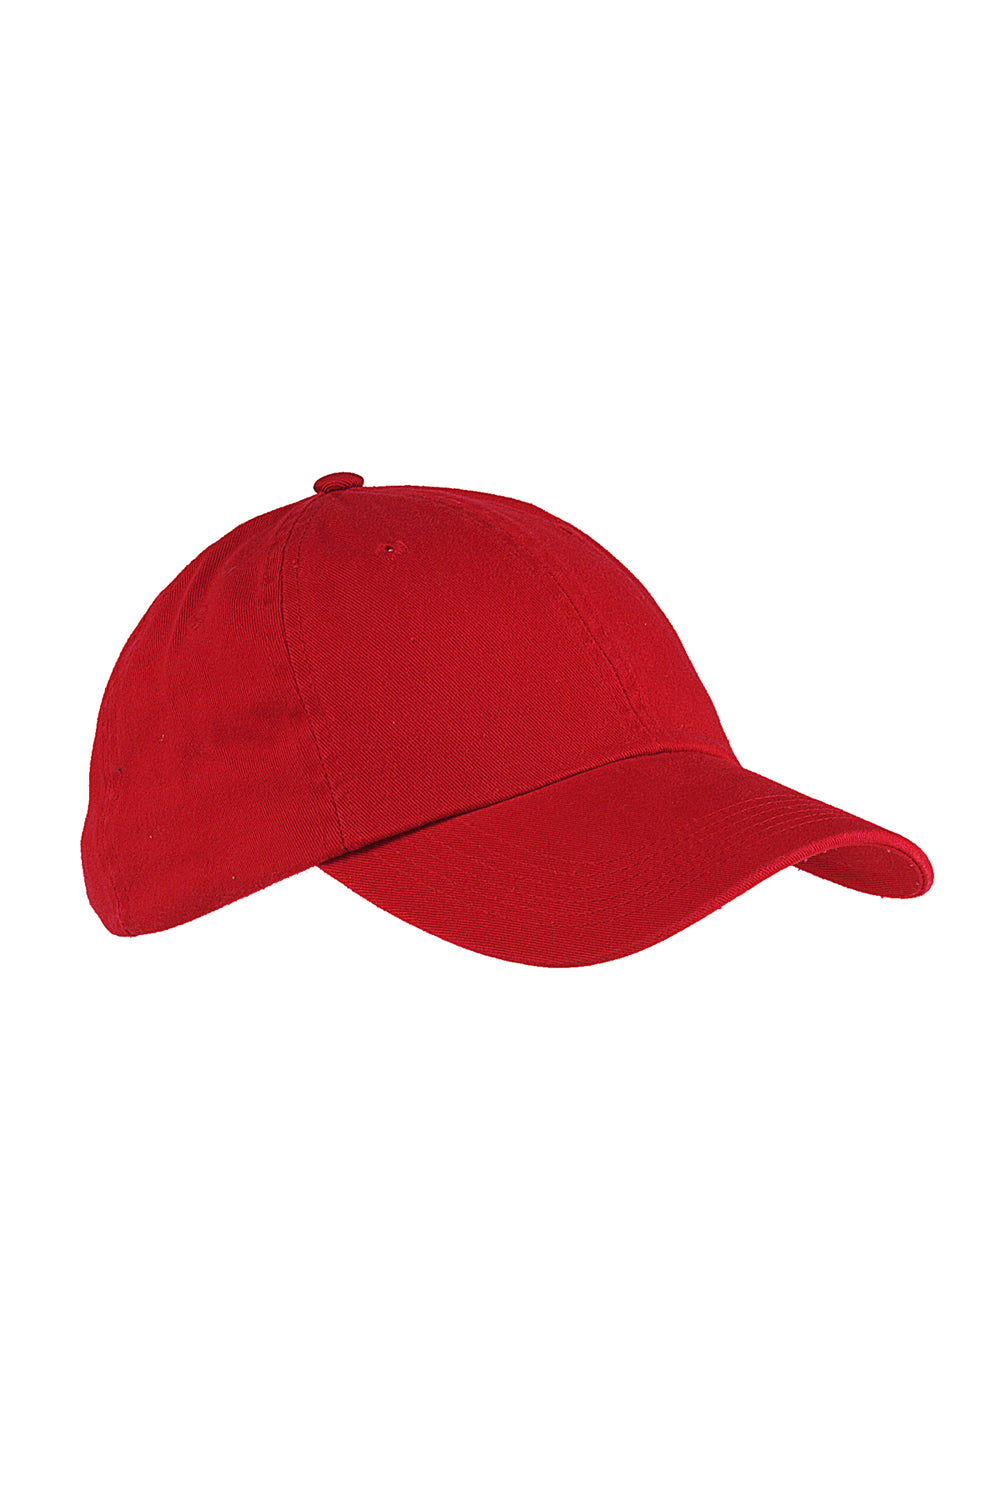 Big Accessories BX005 Mens Adjustable Hat Red Flat Front